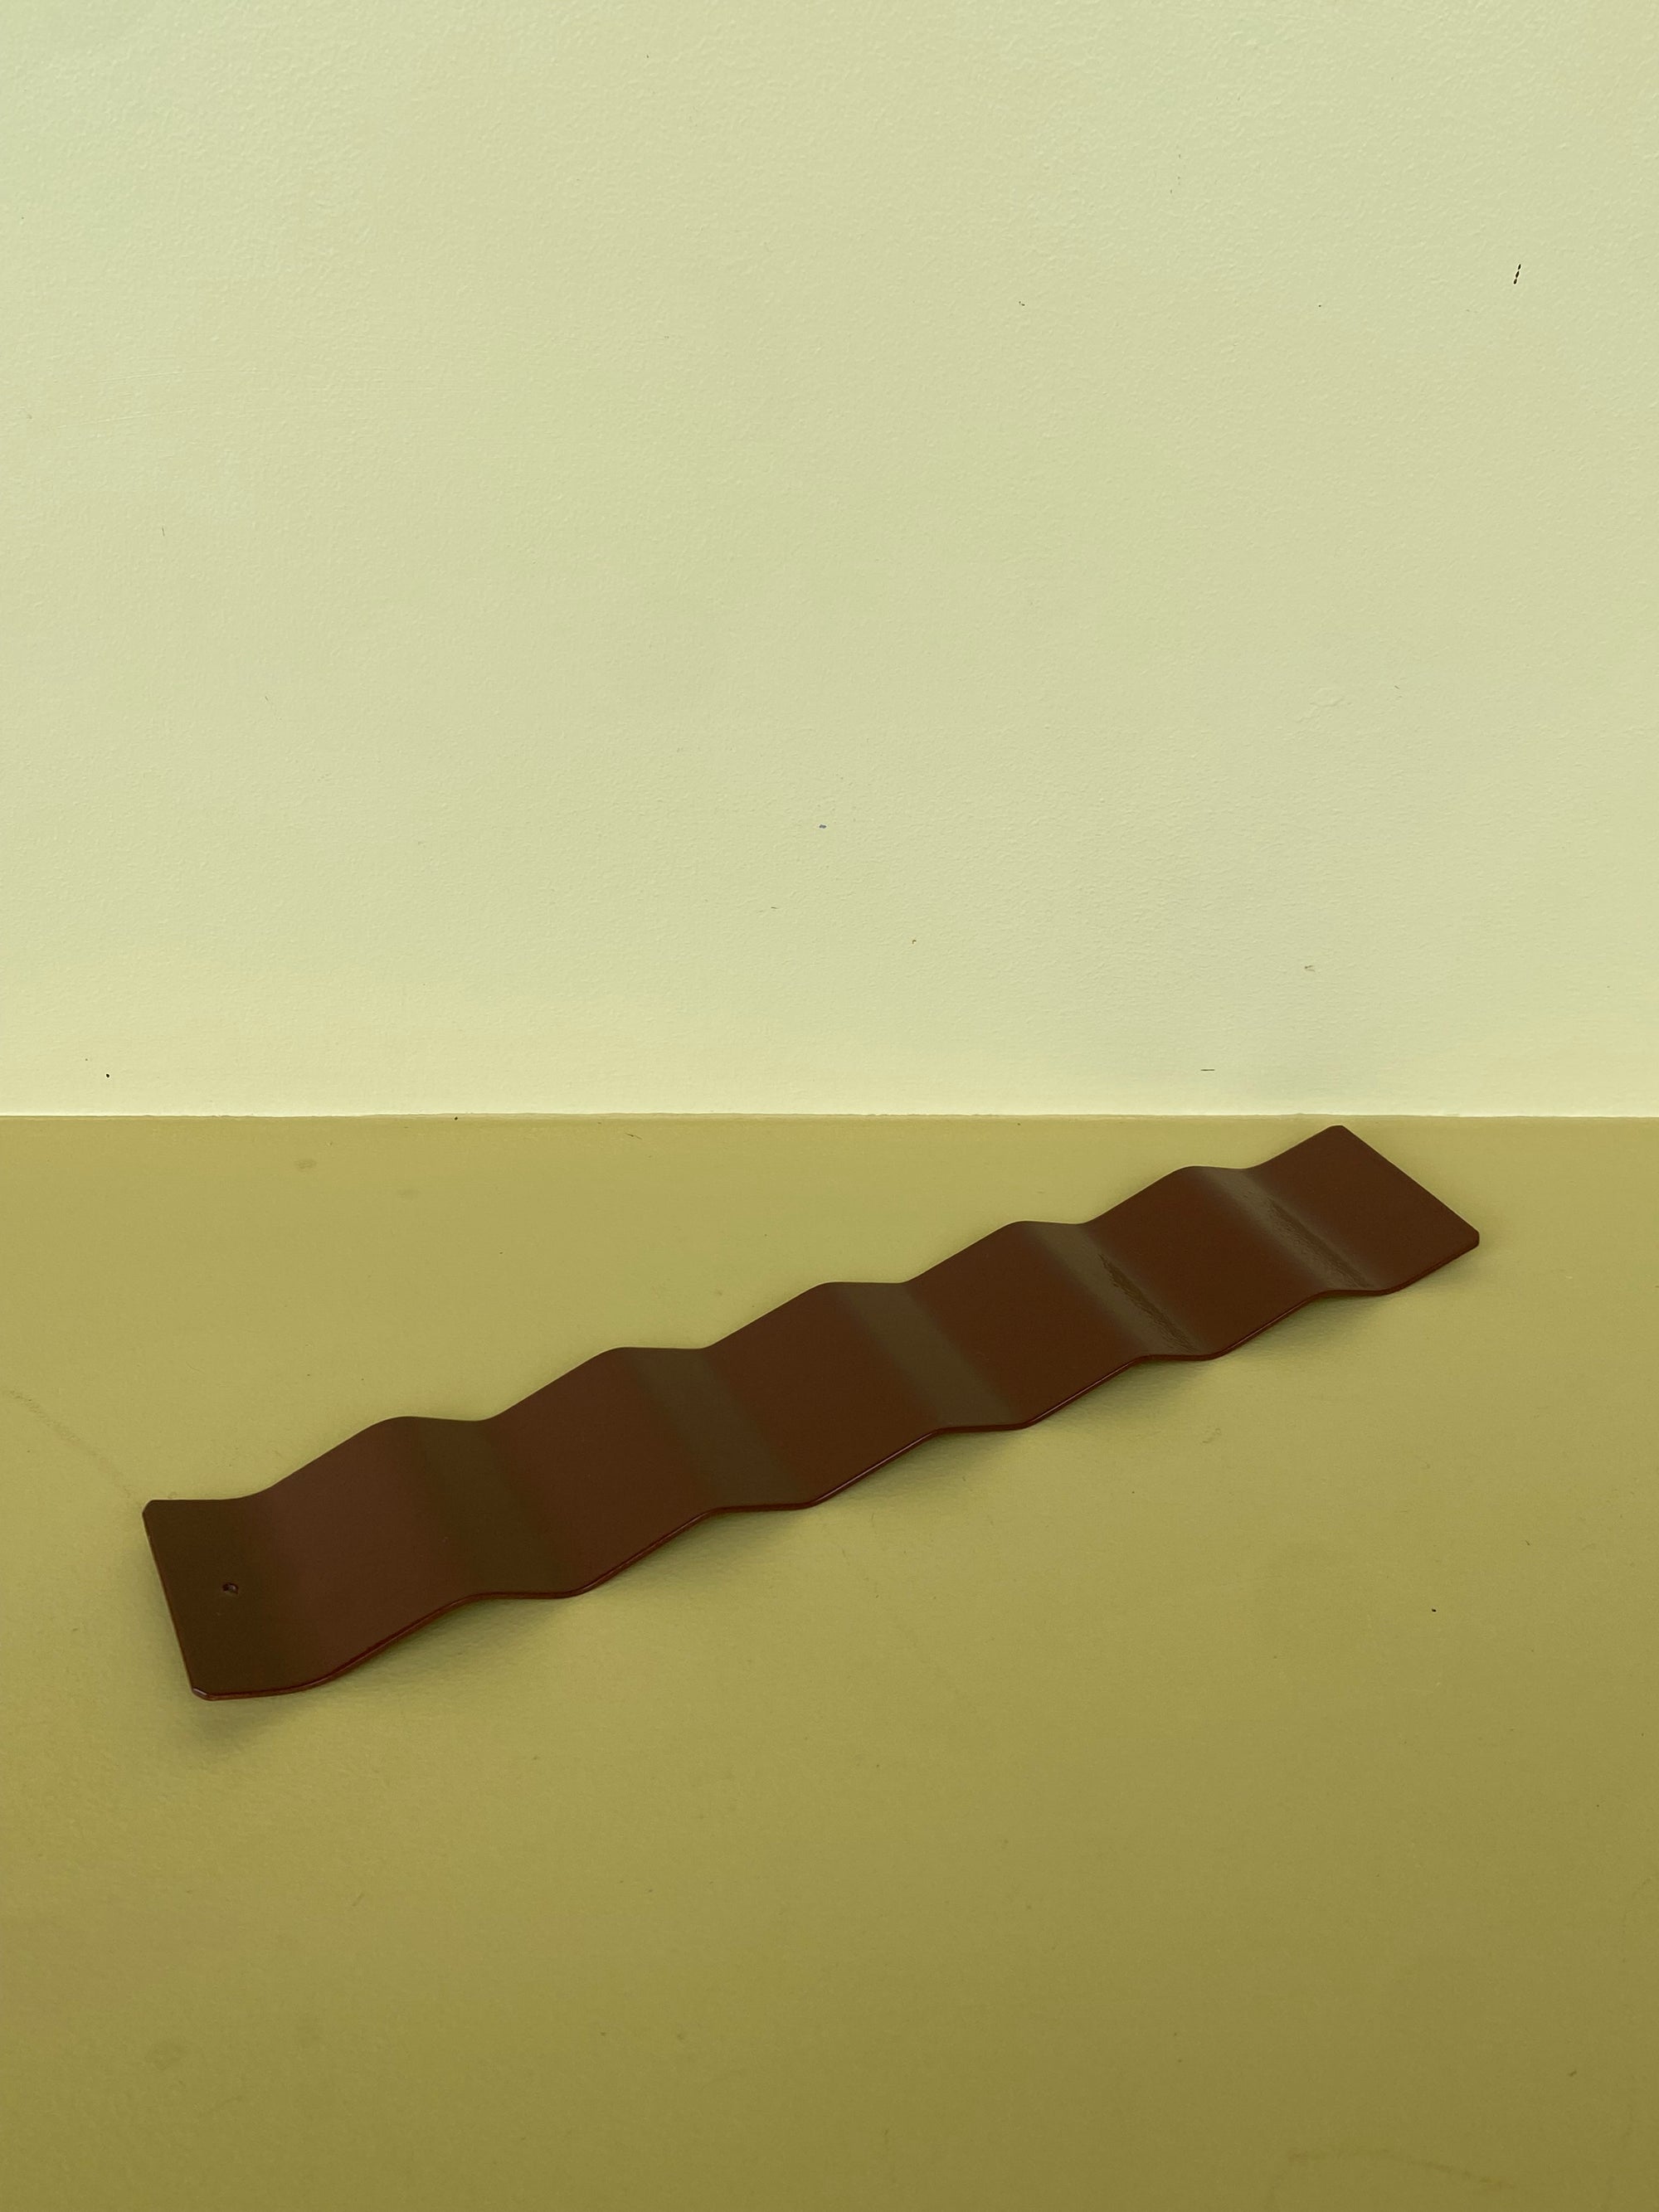 Incense Holder - Chocolate